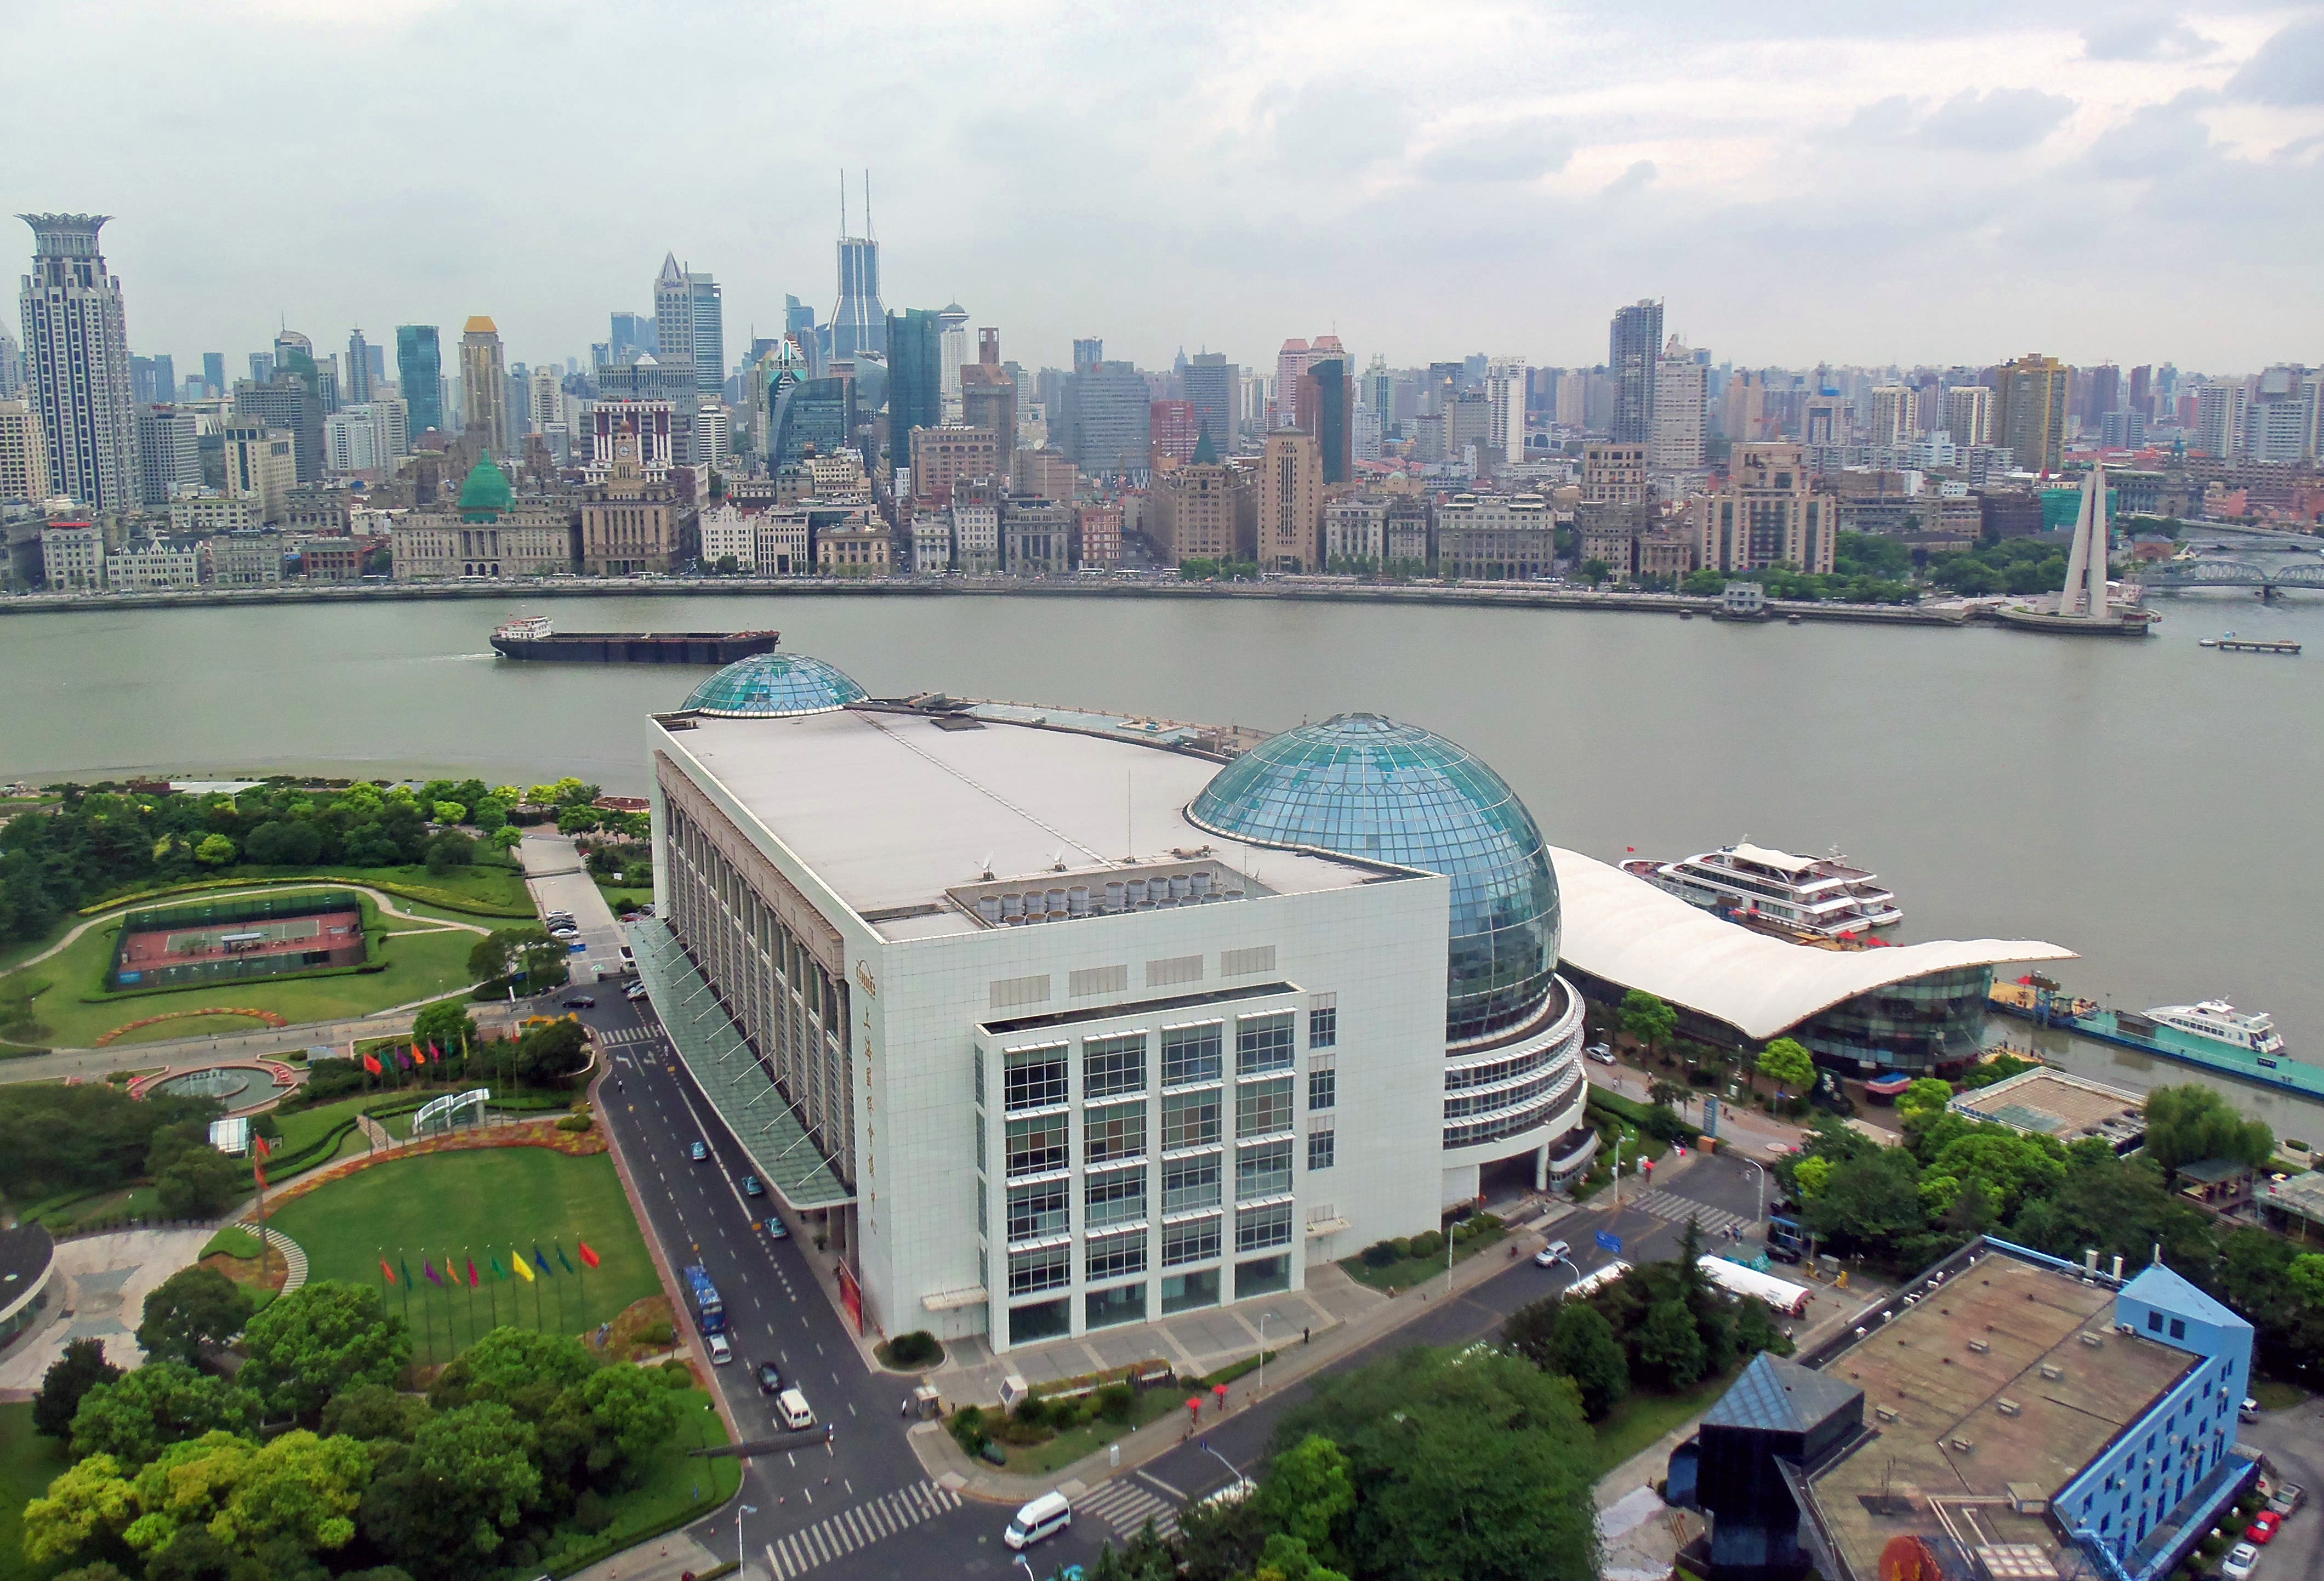 Shanghai International Conference Center, Huangpu River and the Bund